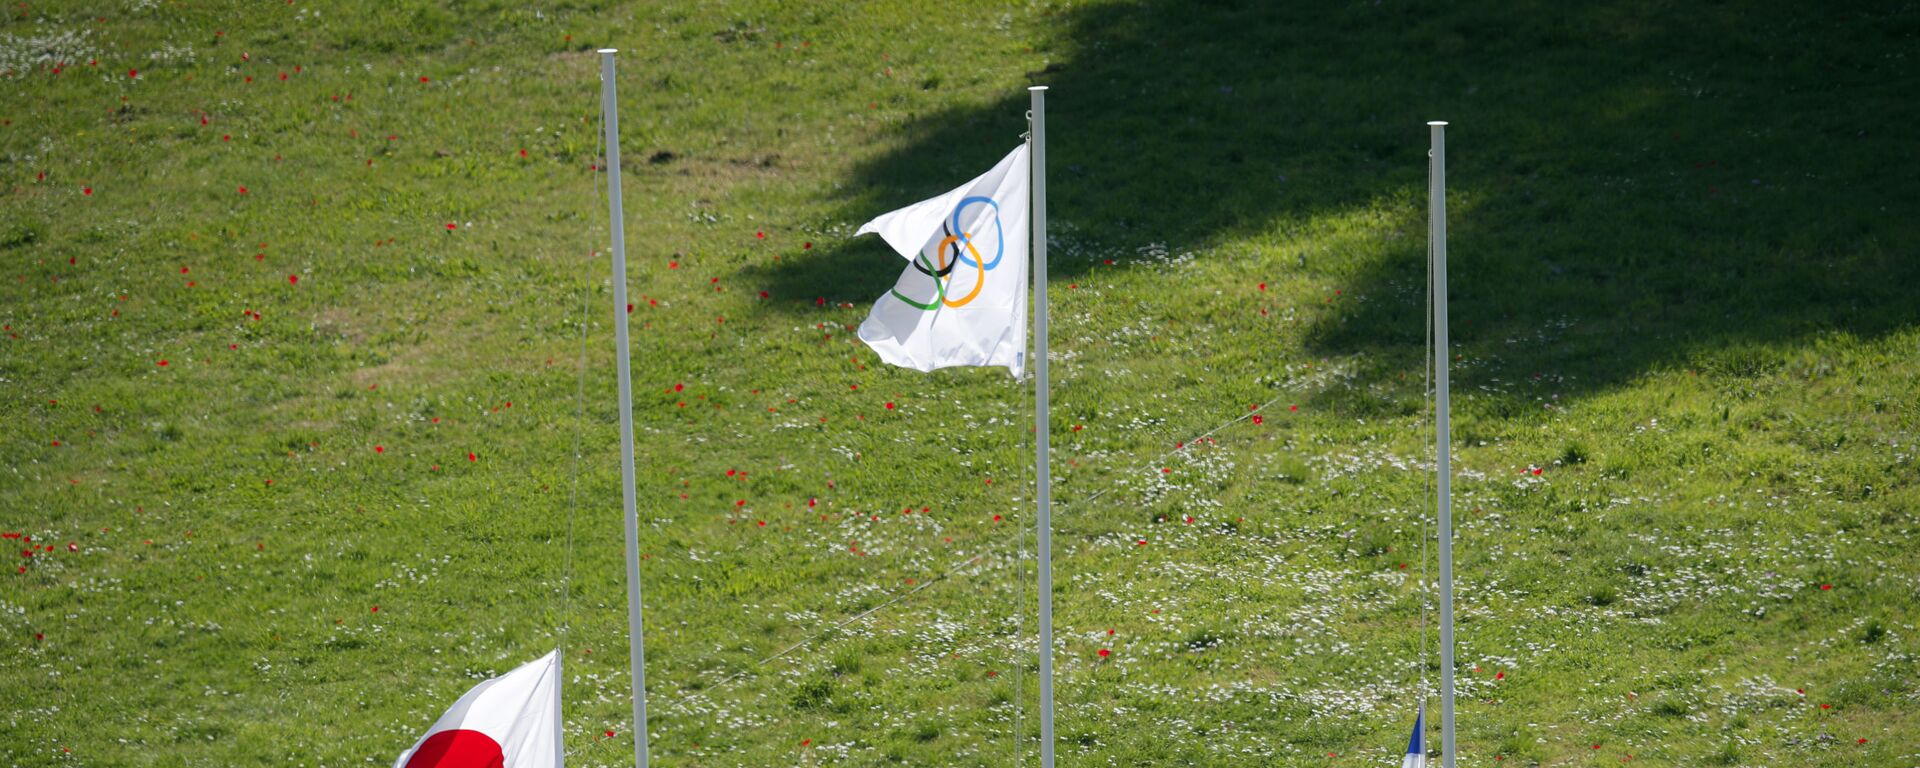 Поднятие флагов на репетиции церемонии зажжения Олимпийского огня для Токио-2020 - Sputnik Латвия, 1920, 20.03.2021